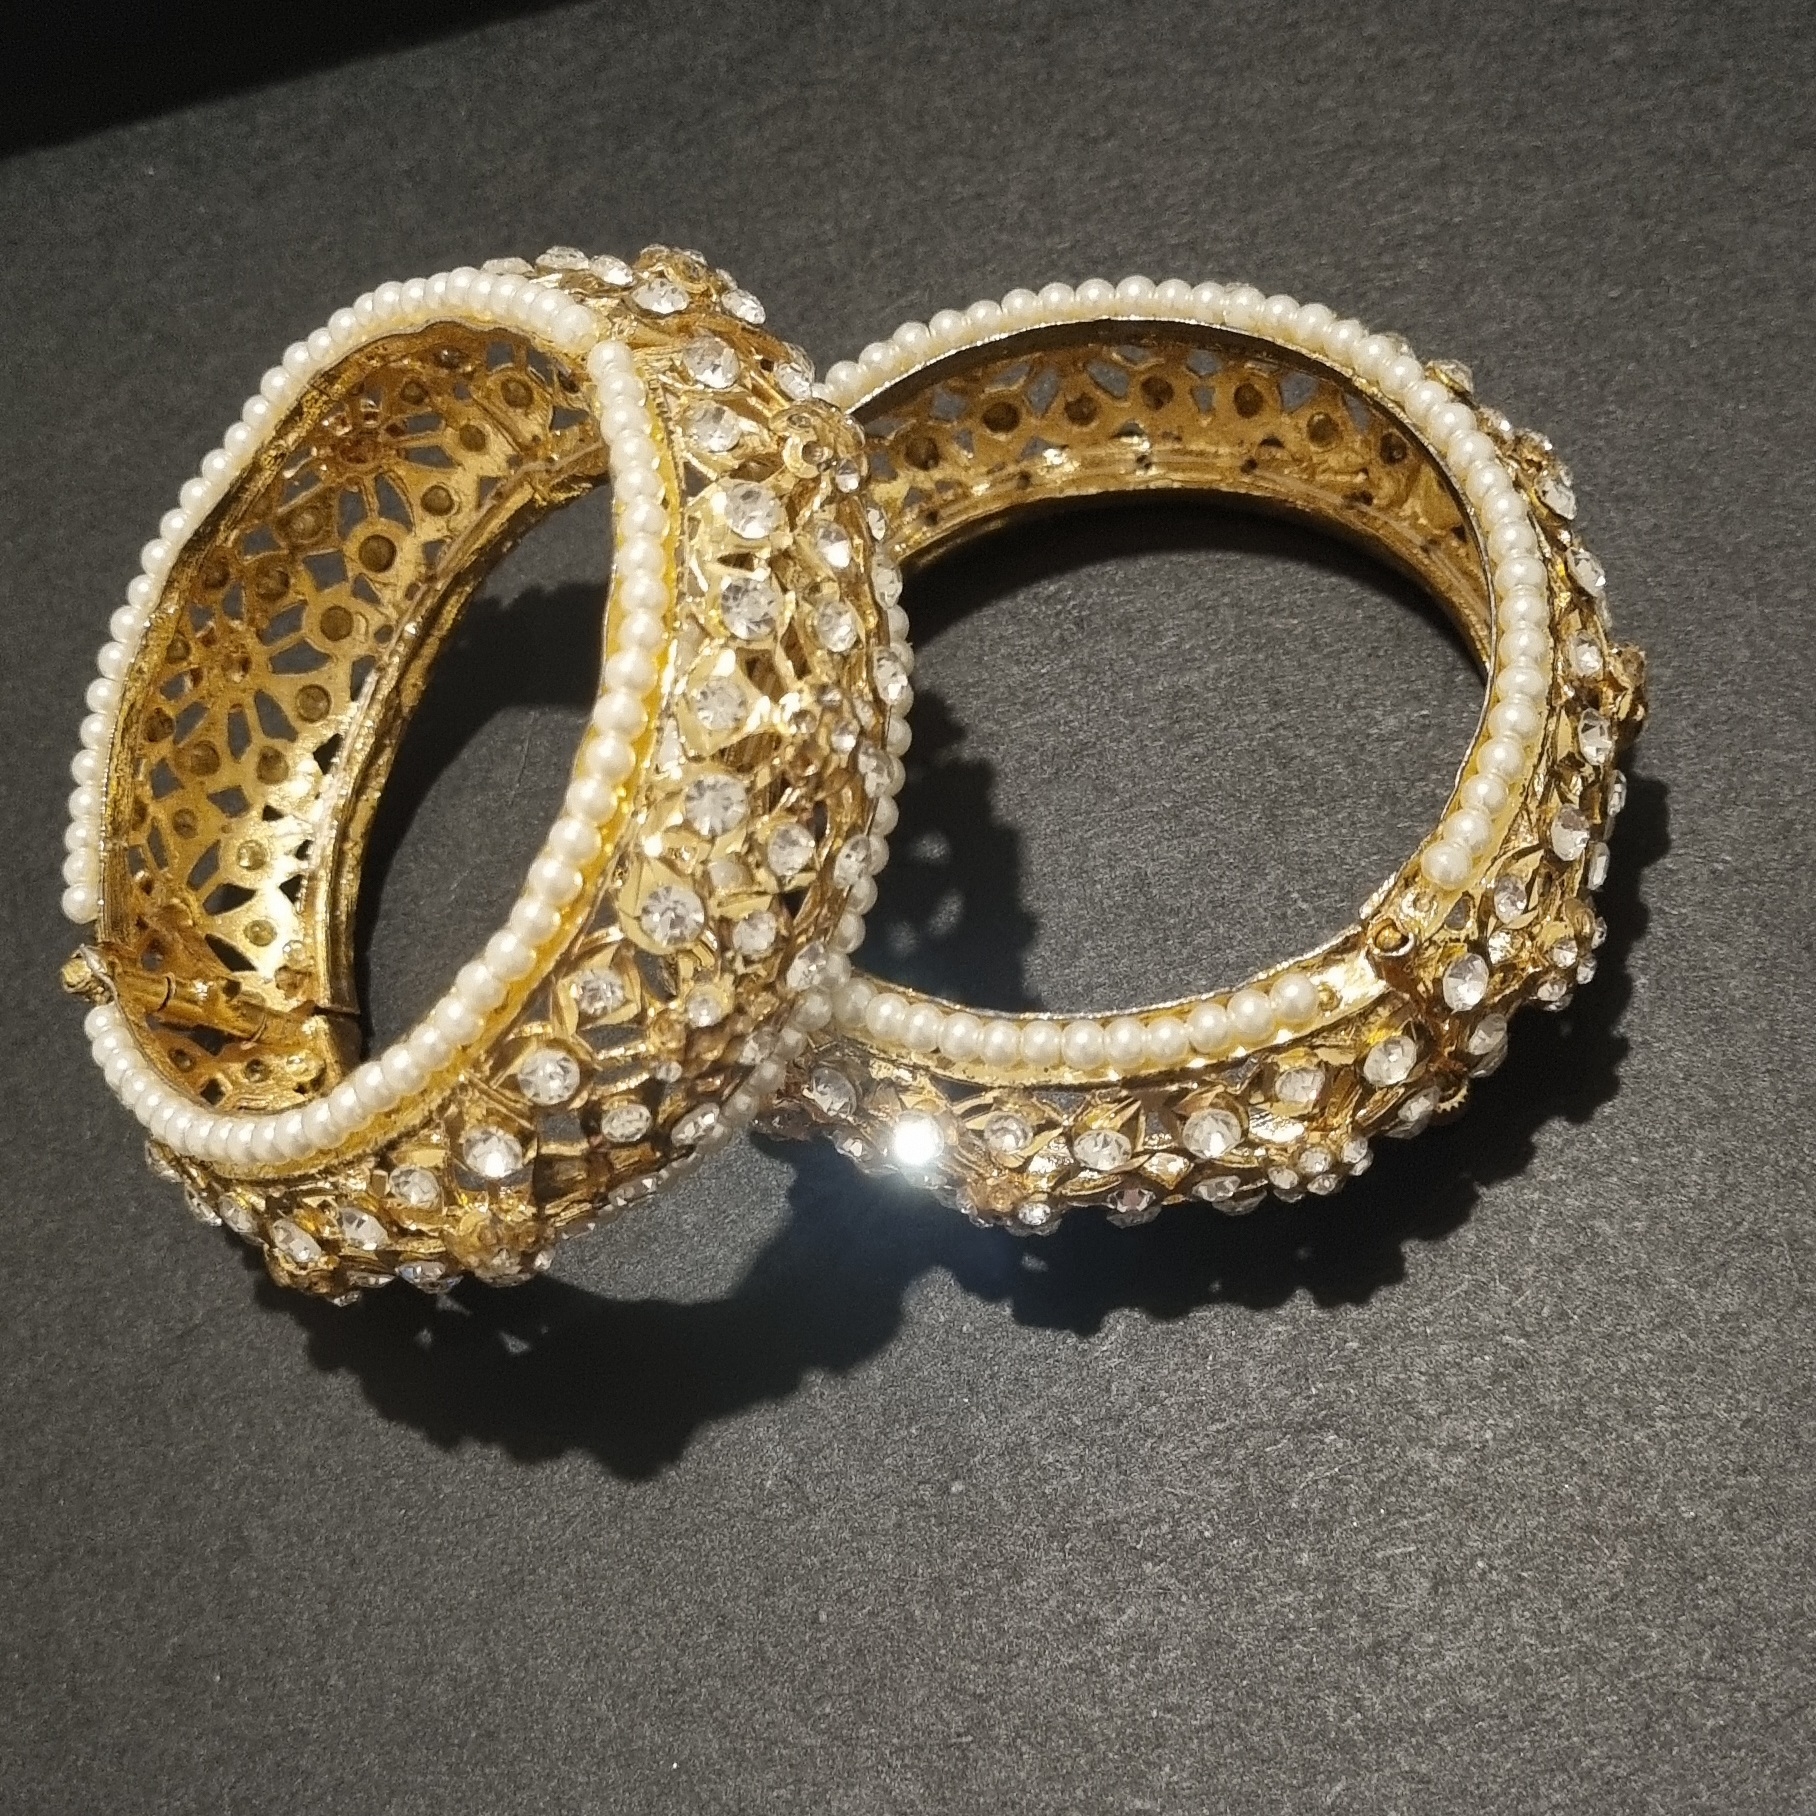 Swavo bradford wedding jewellery bangles